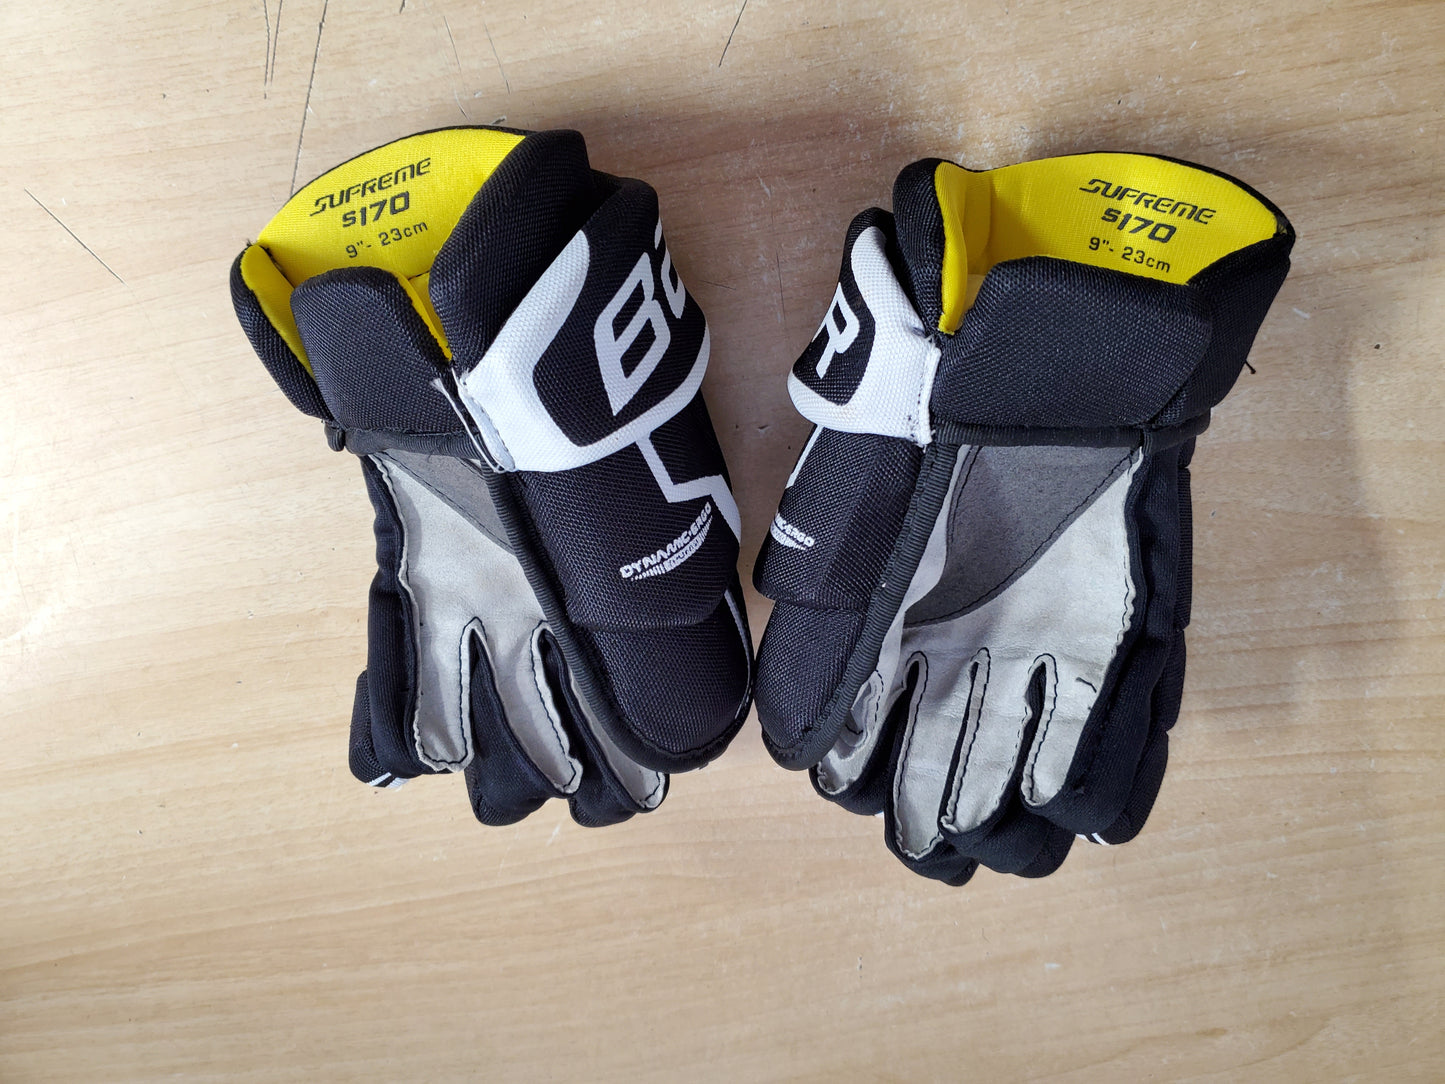 Hockey Gloves Child Size 9 inch Bauer Supreme 170 Black White Yellow New Demo